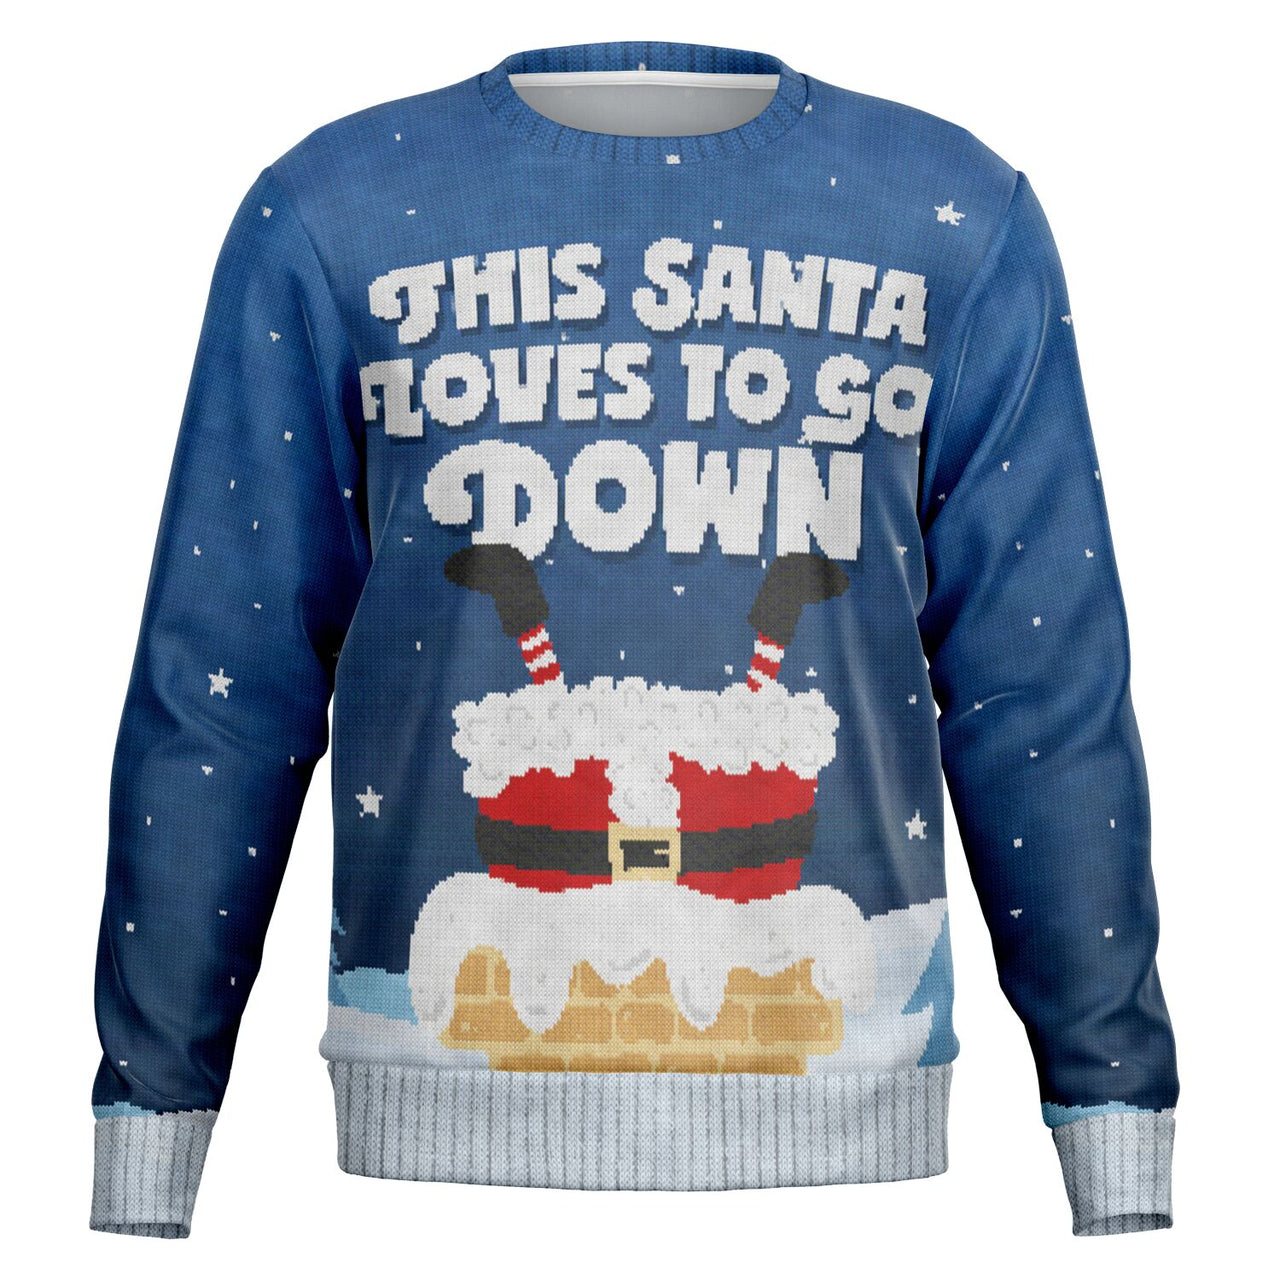 This Santa Loves To Go Down Ugly Christmas Fashion Sweatshirt - Adult AOP